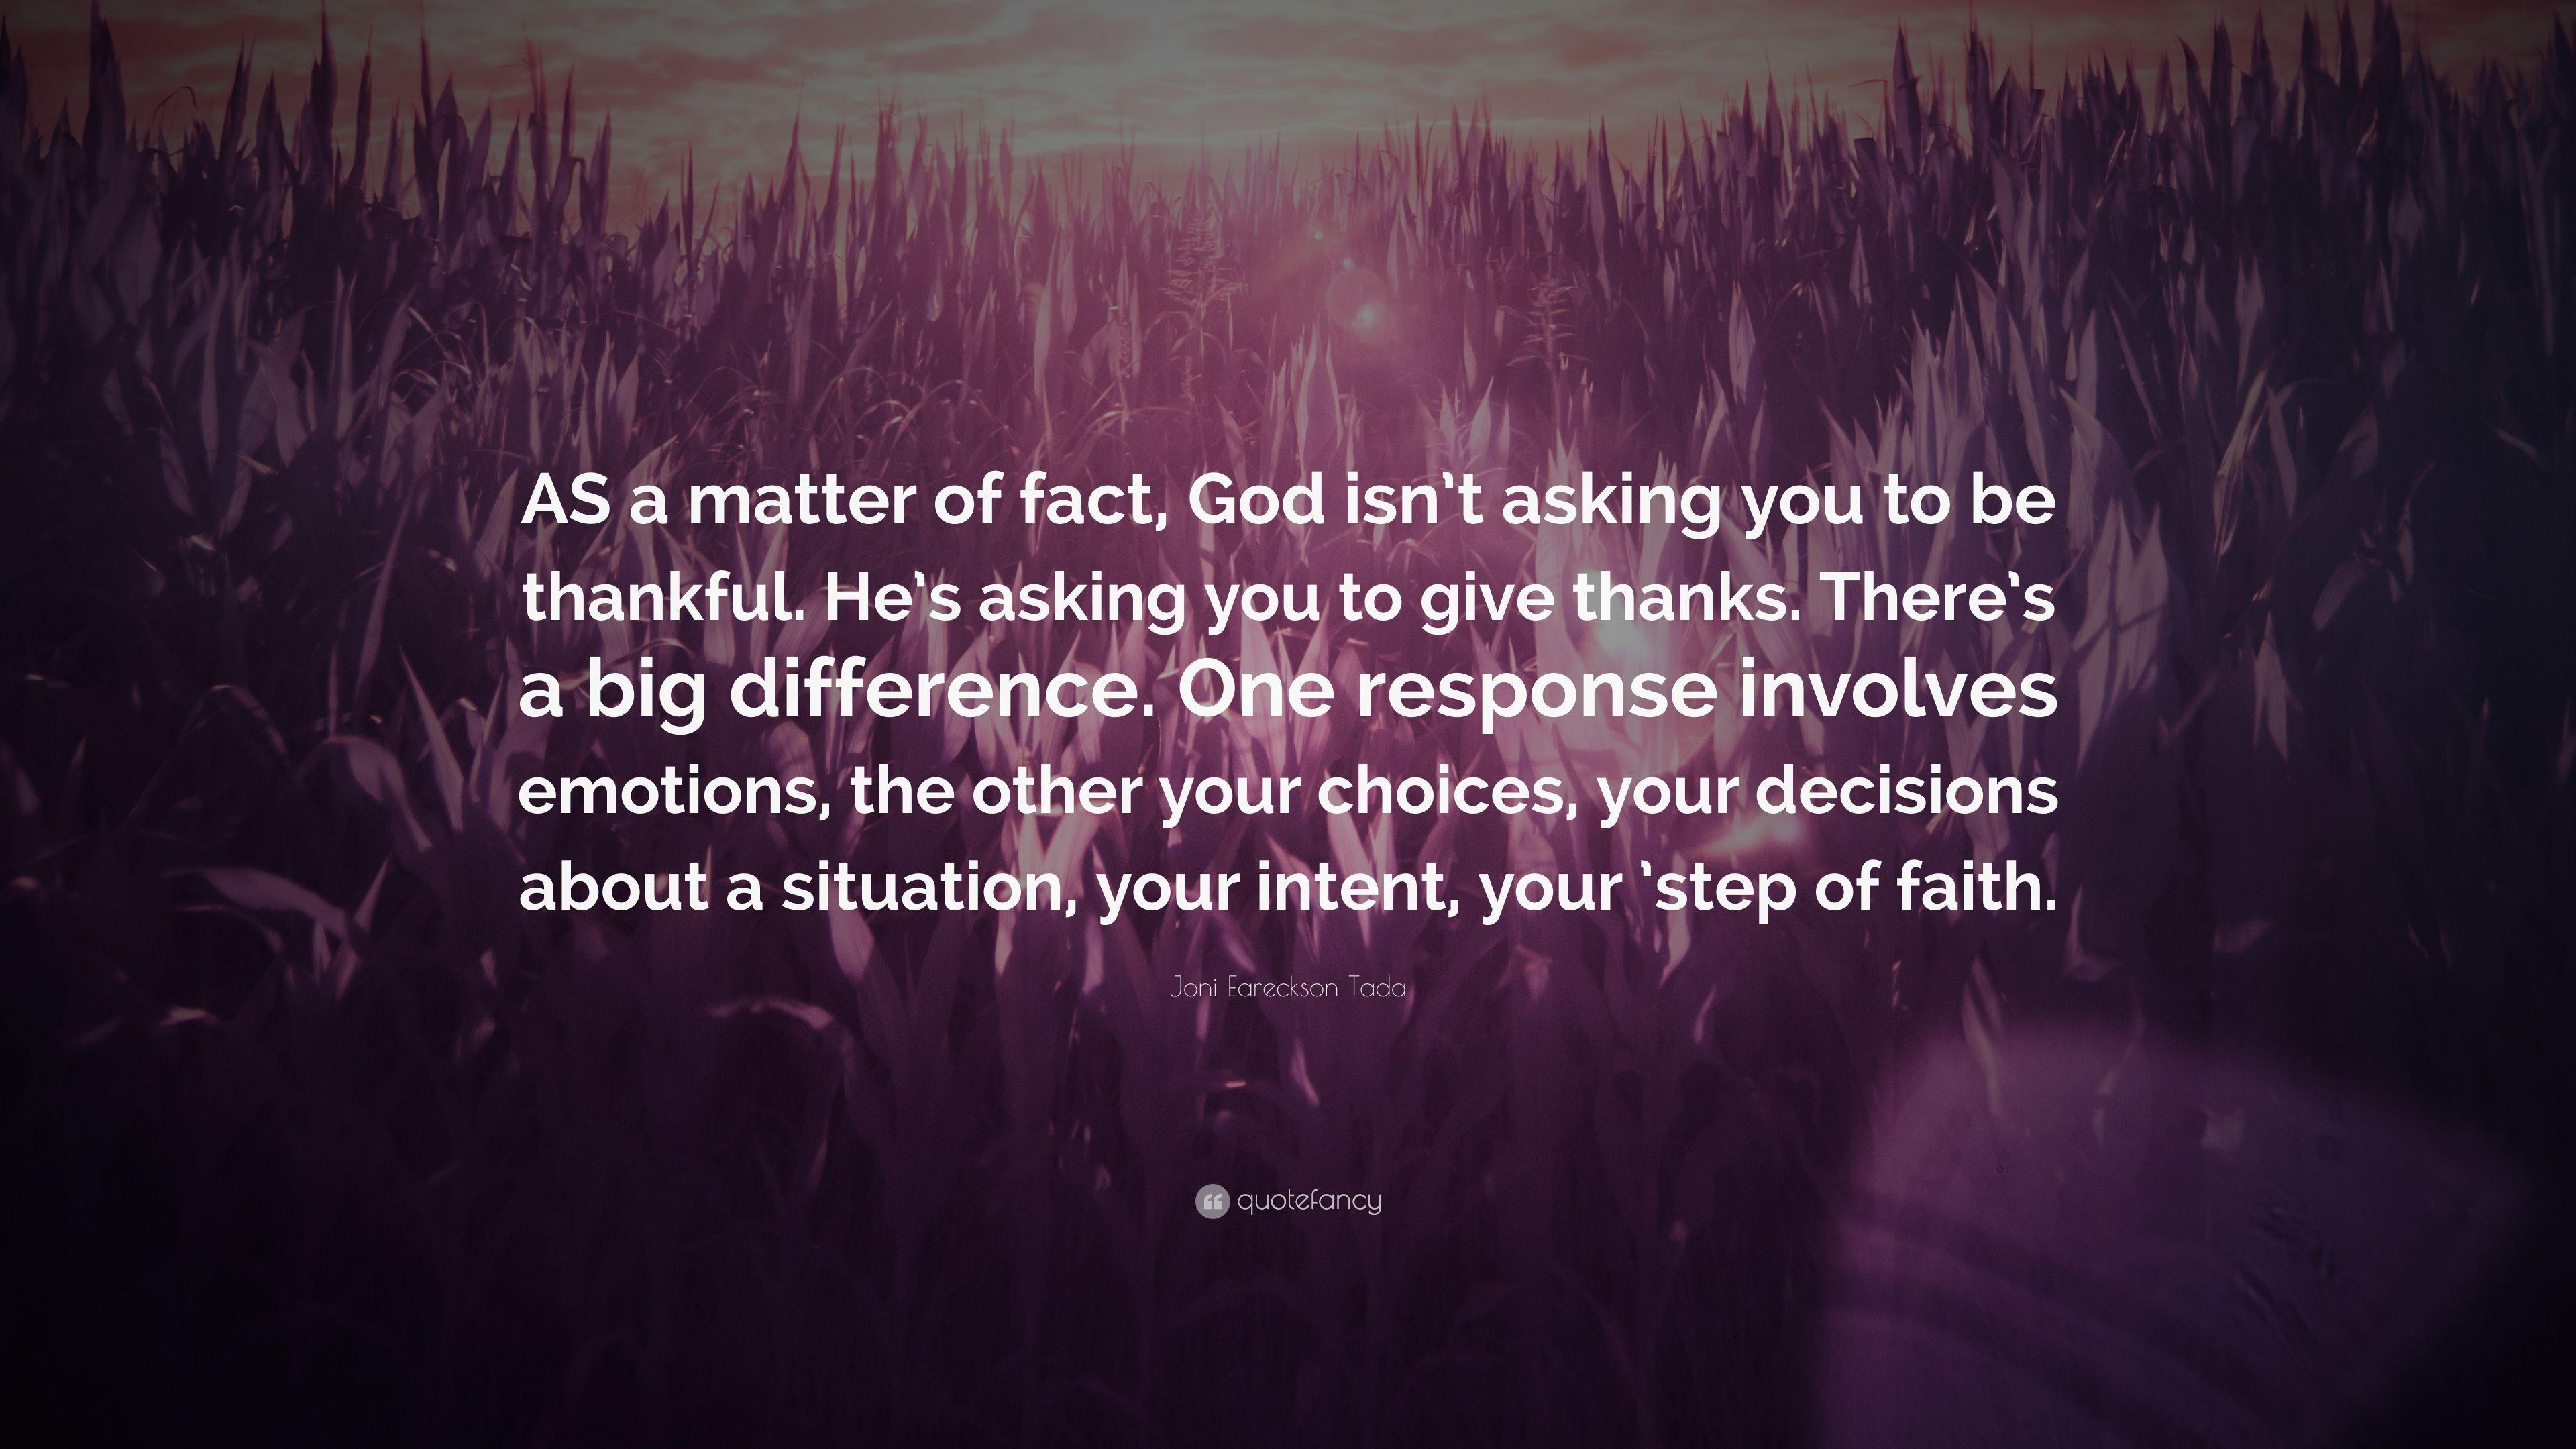 Joni Eareckson Tada Quote: “AS a matter of fact, God isn't asking